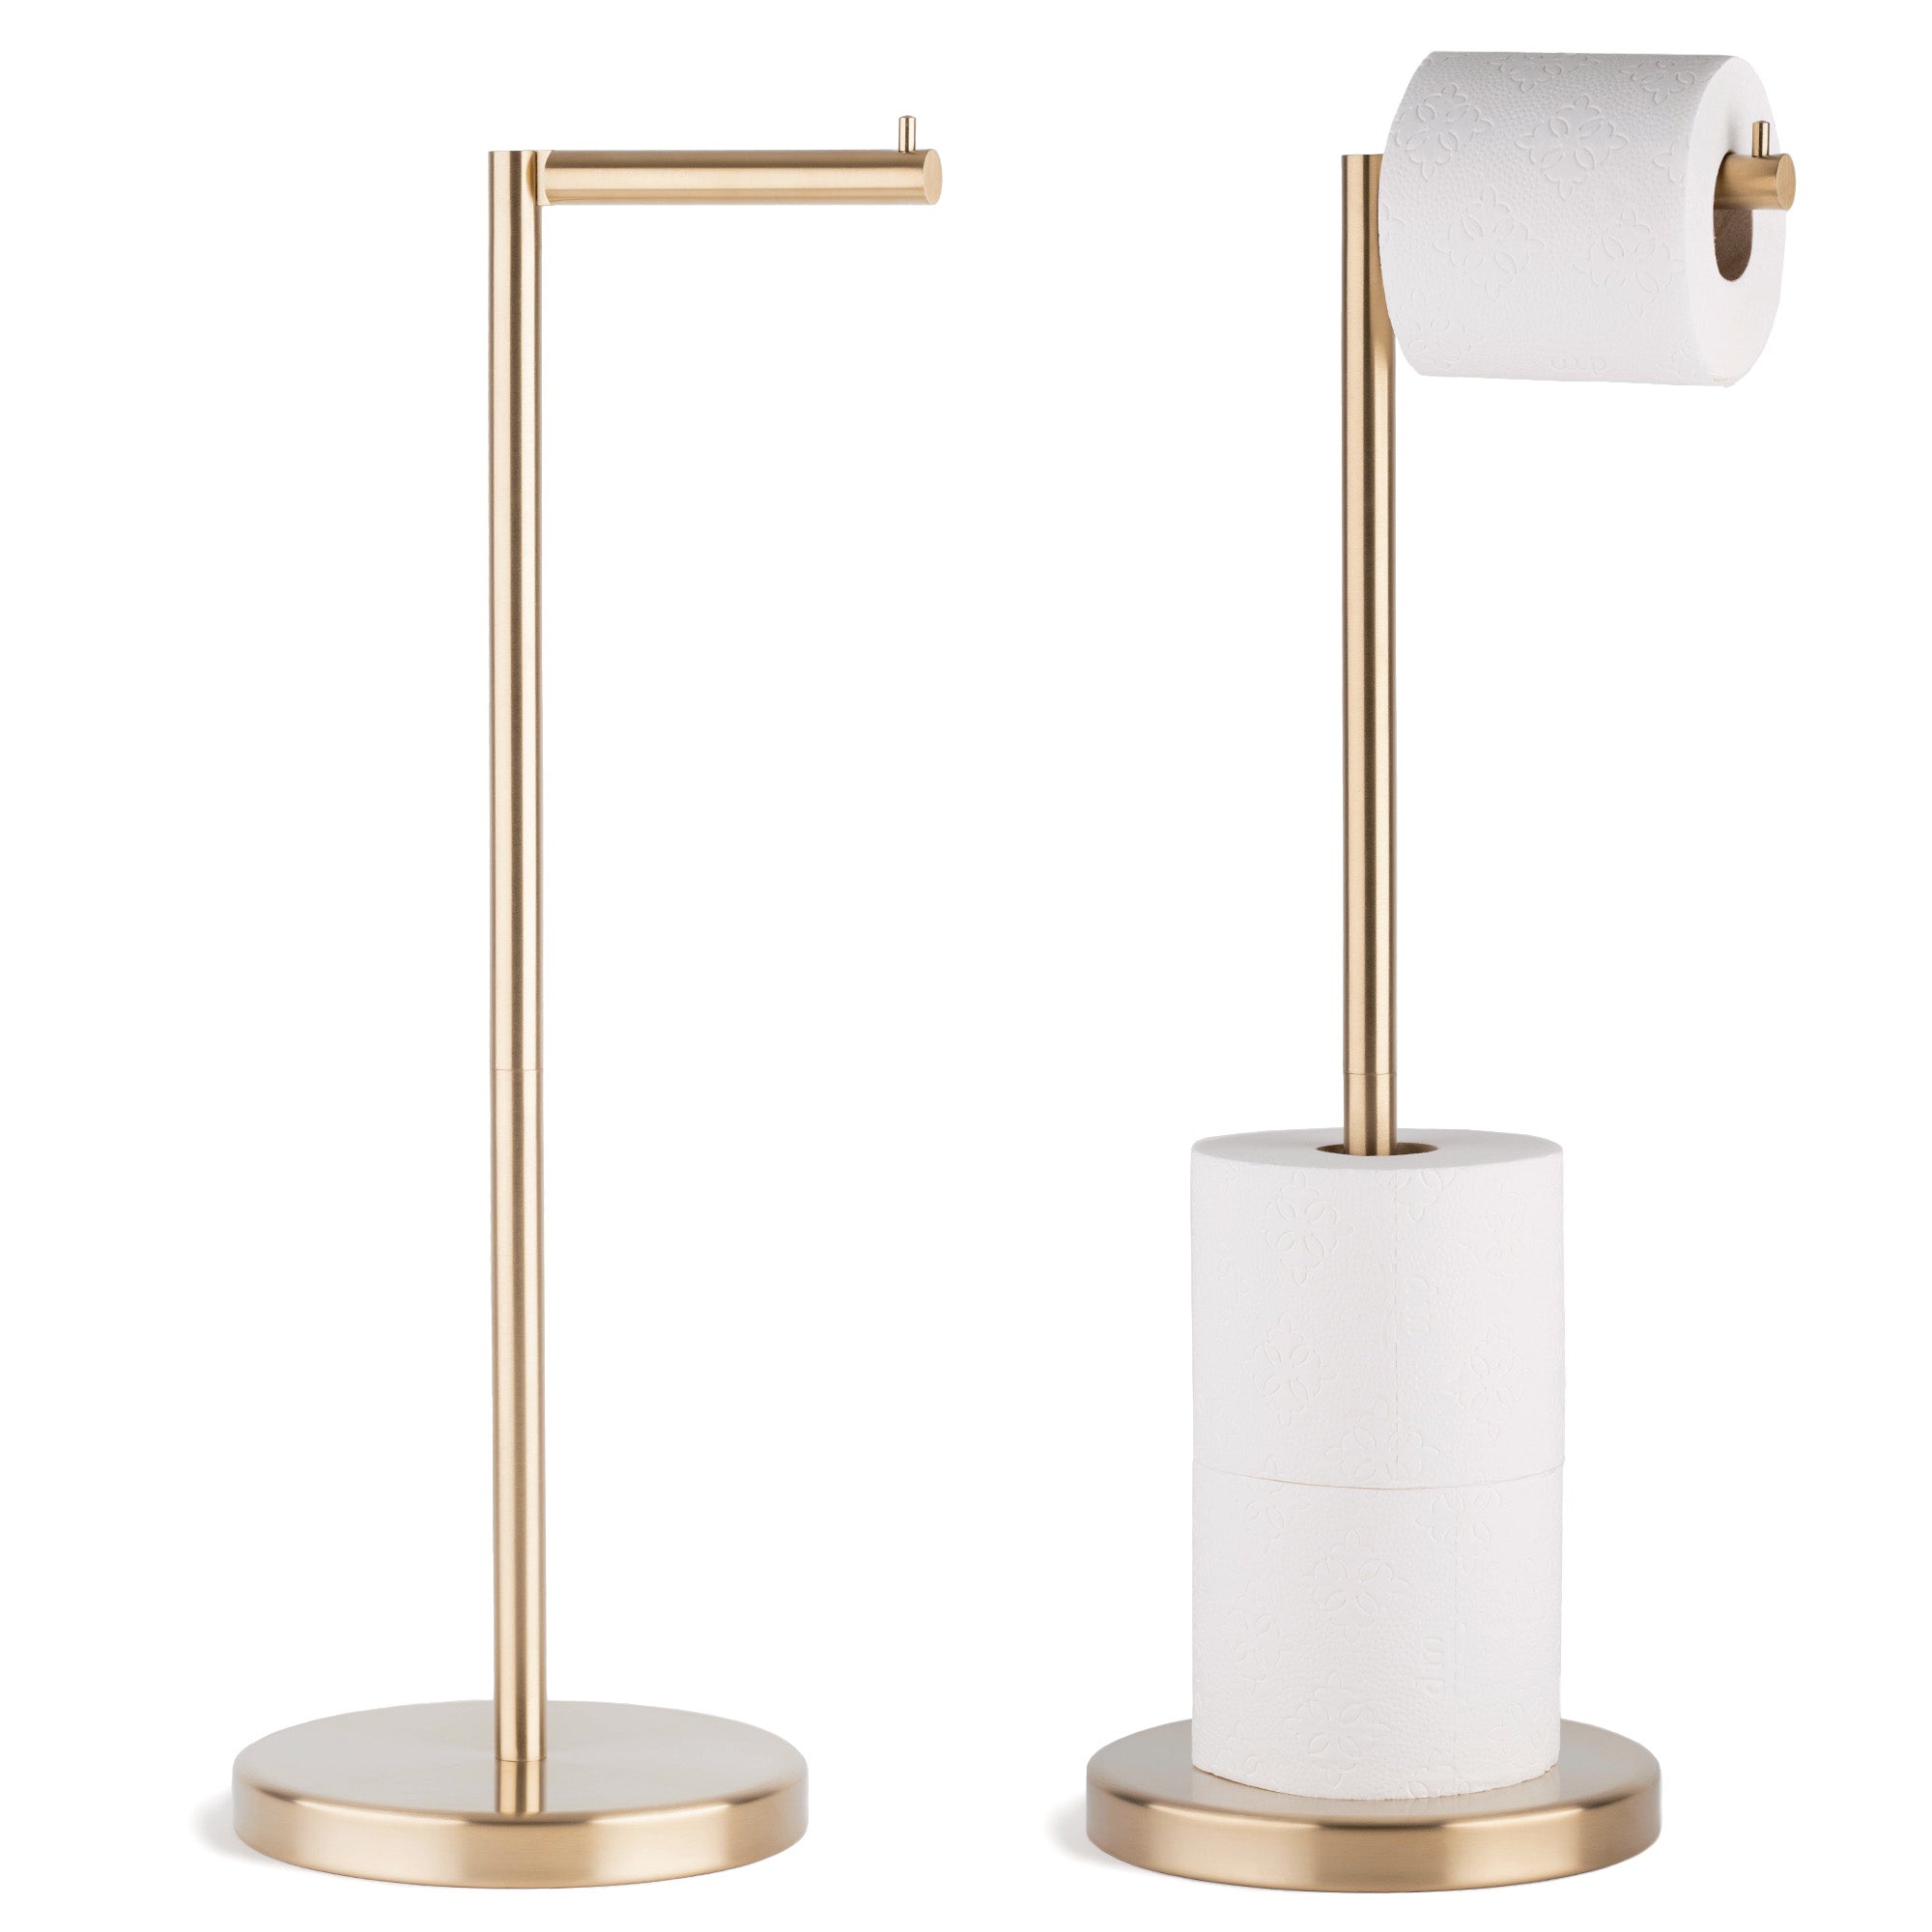 4 Rolls Storage - Free Standing Toilet Paper Holder Stand  (Gold)